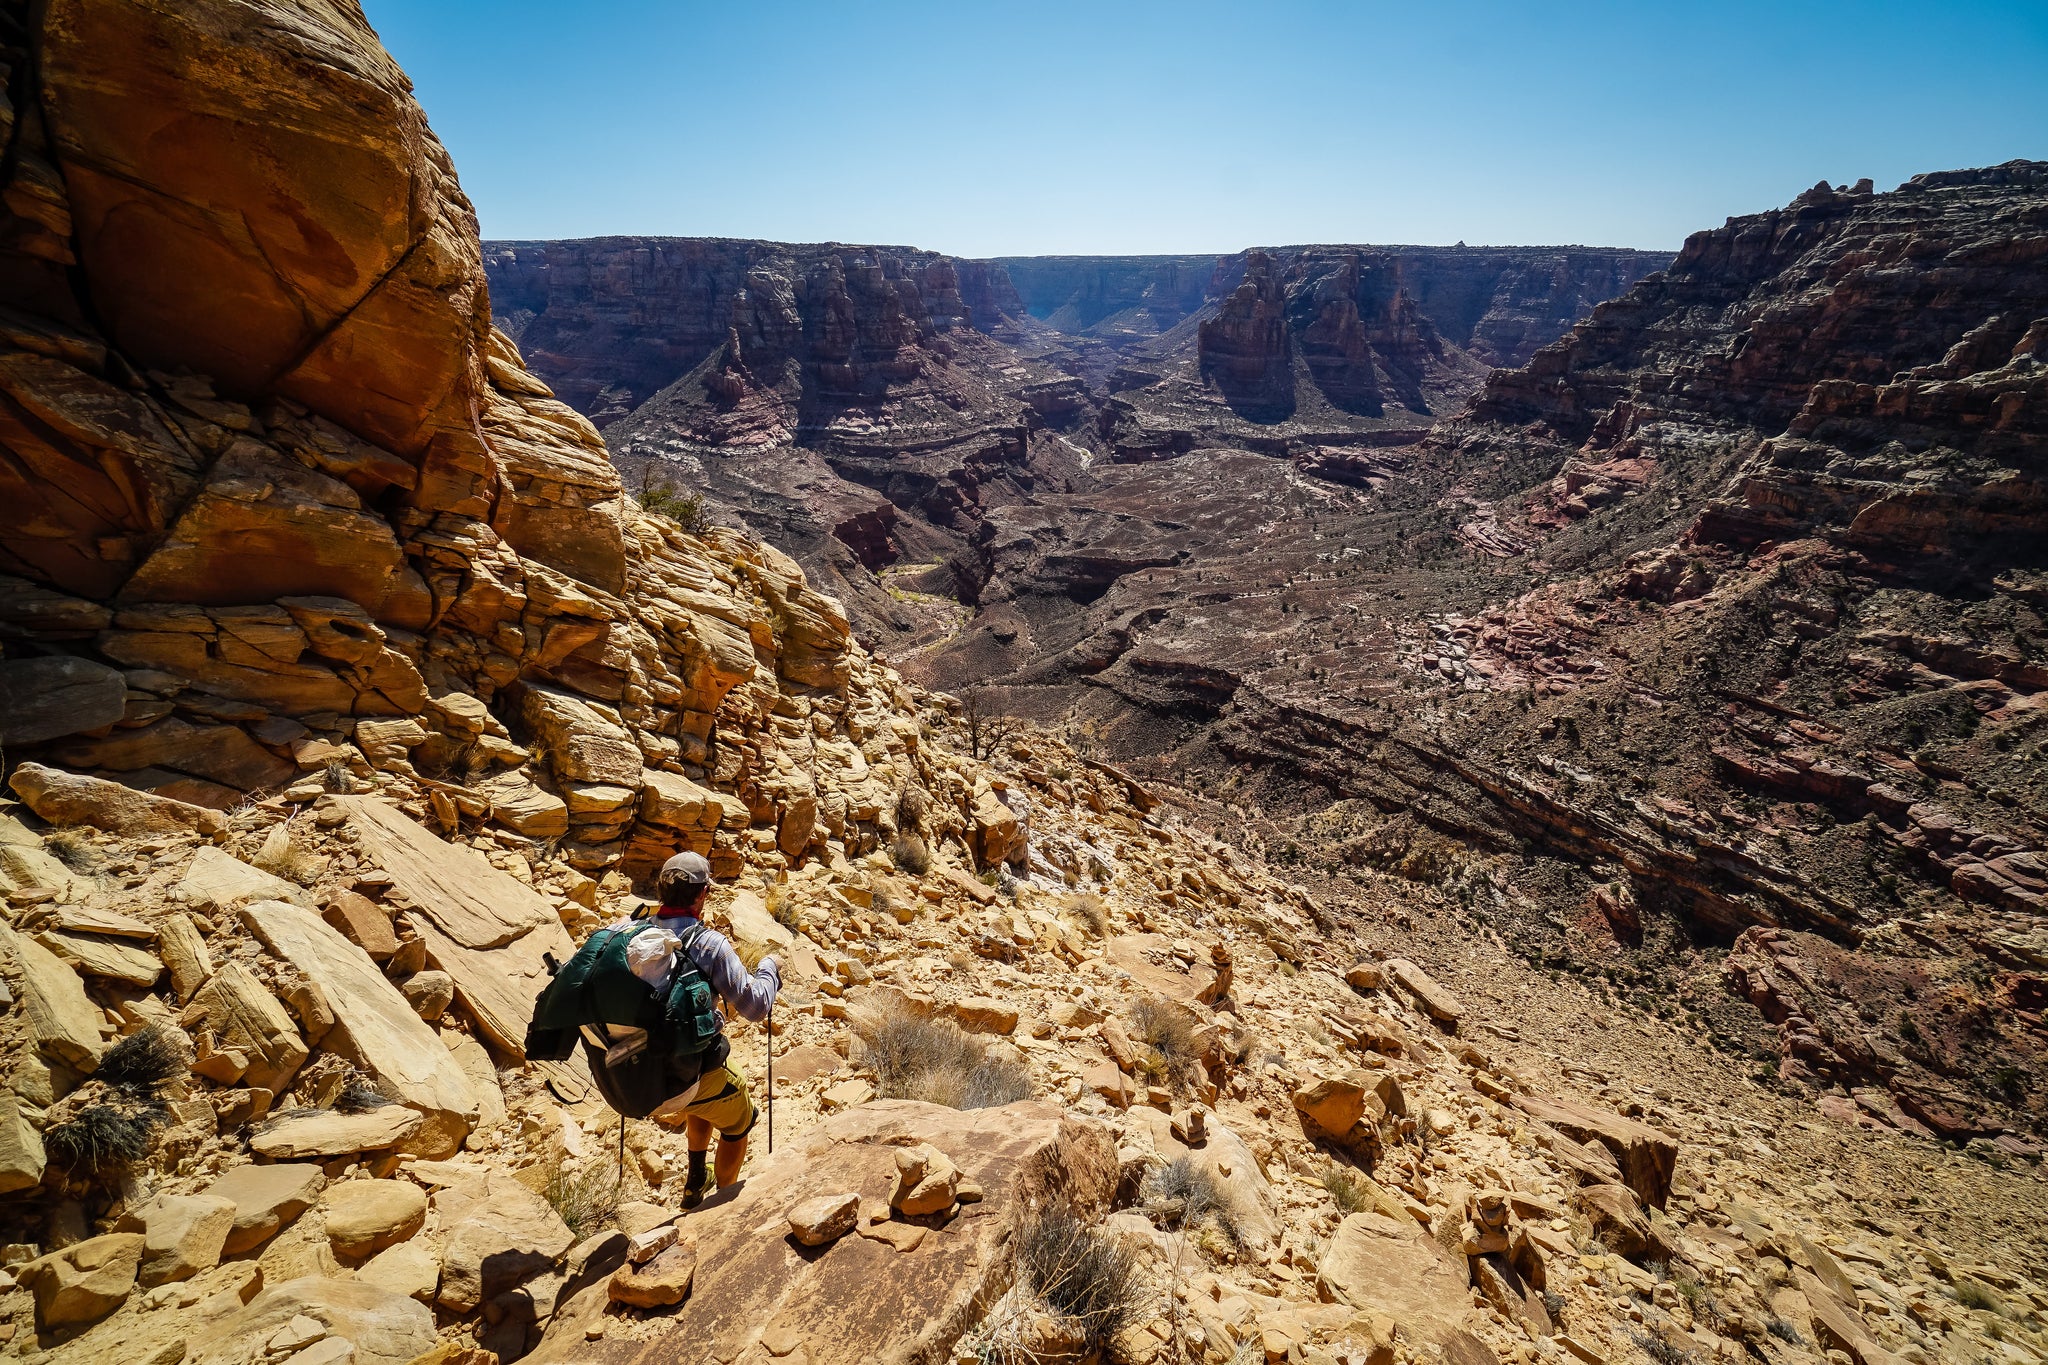 Hiker descending into the canyon